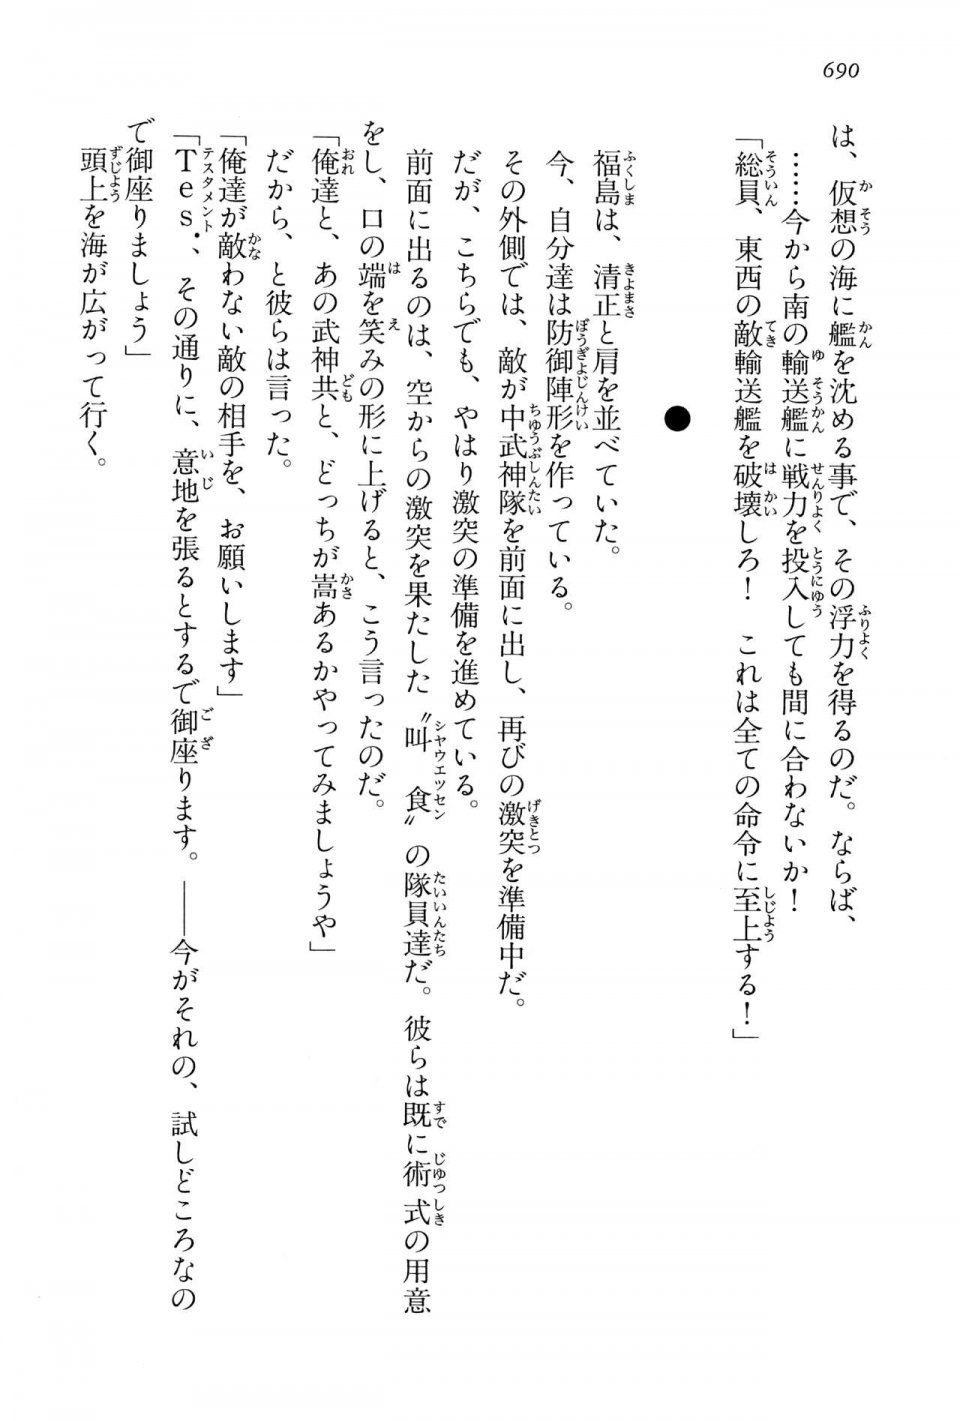 Kyoukai Senjou no Horizon LN Vol 15(6C) Part 2 - Photo #160